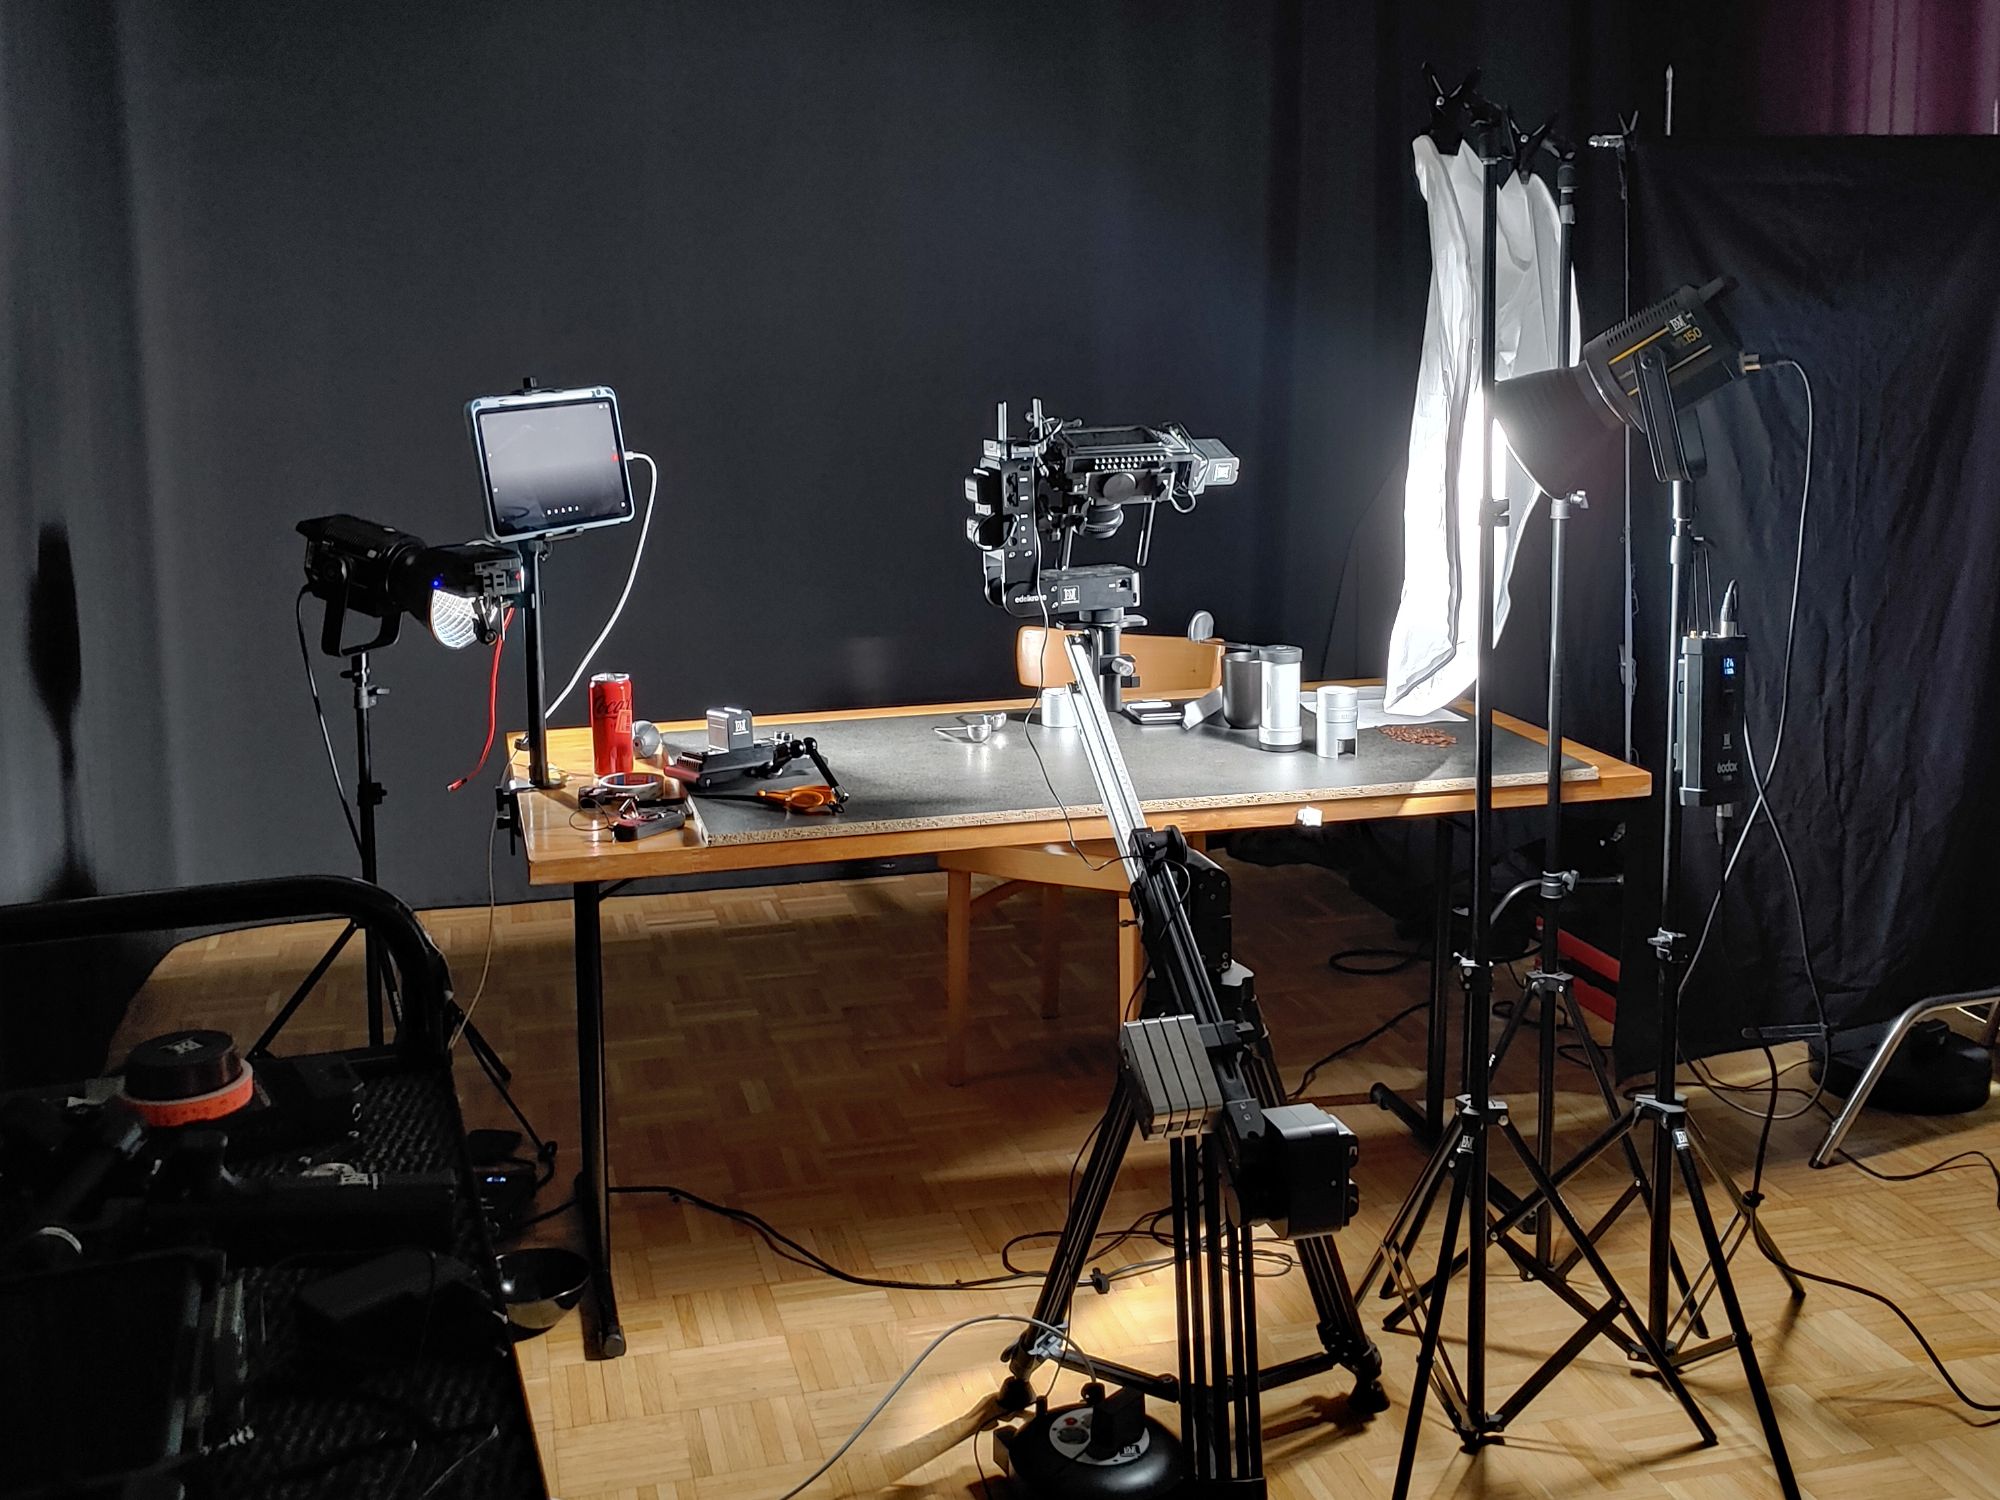 Kamerakran filmt die Produkte im Studio von D&J Productions